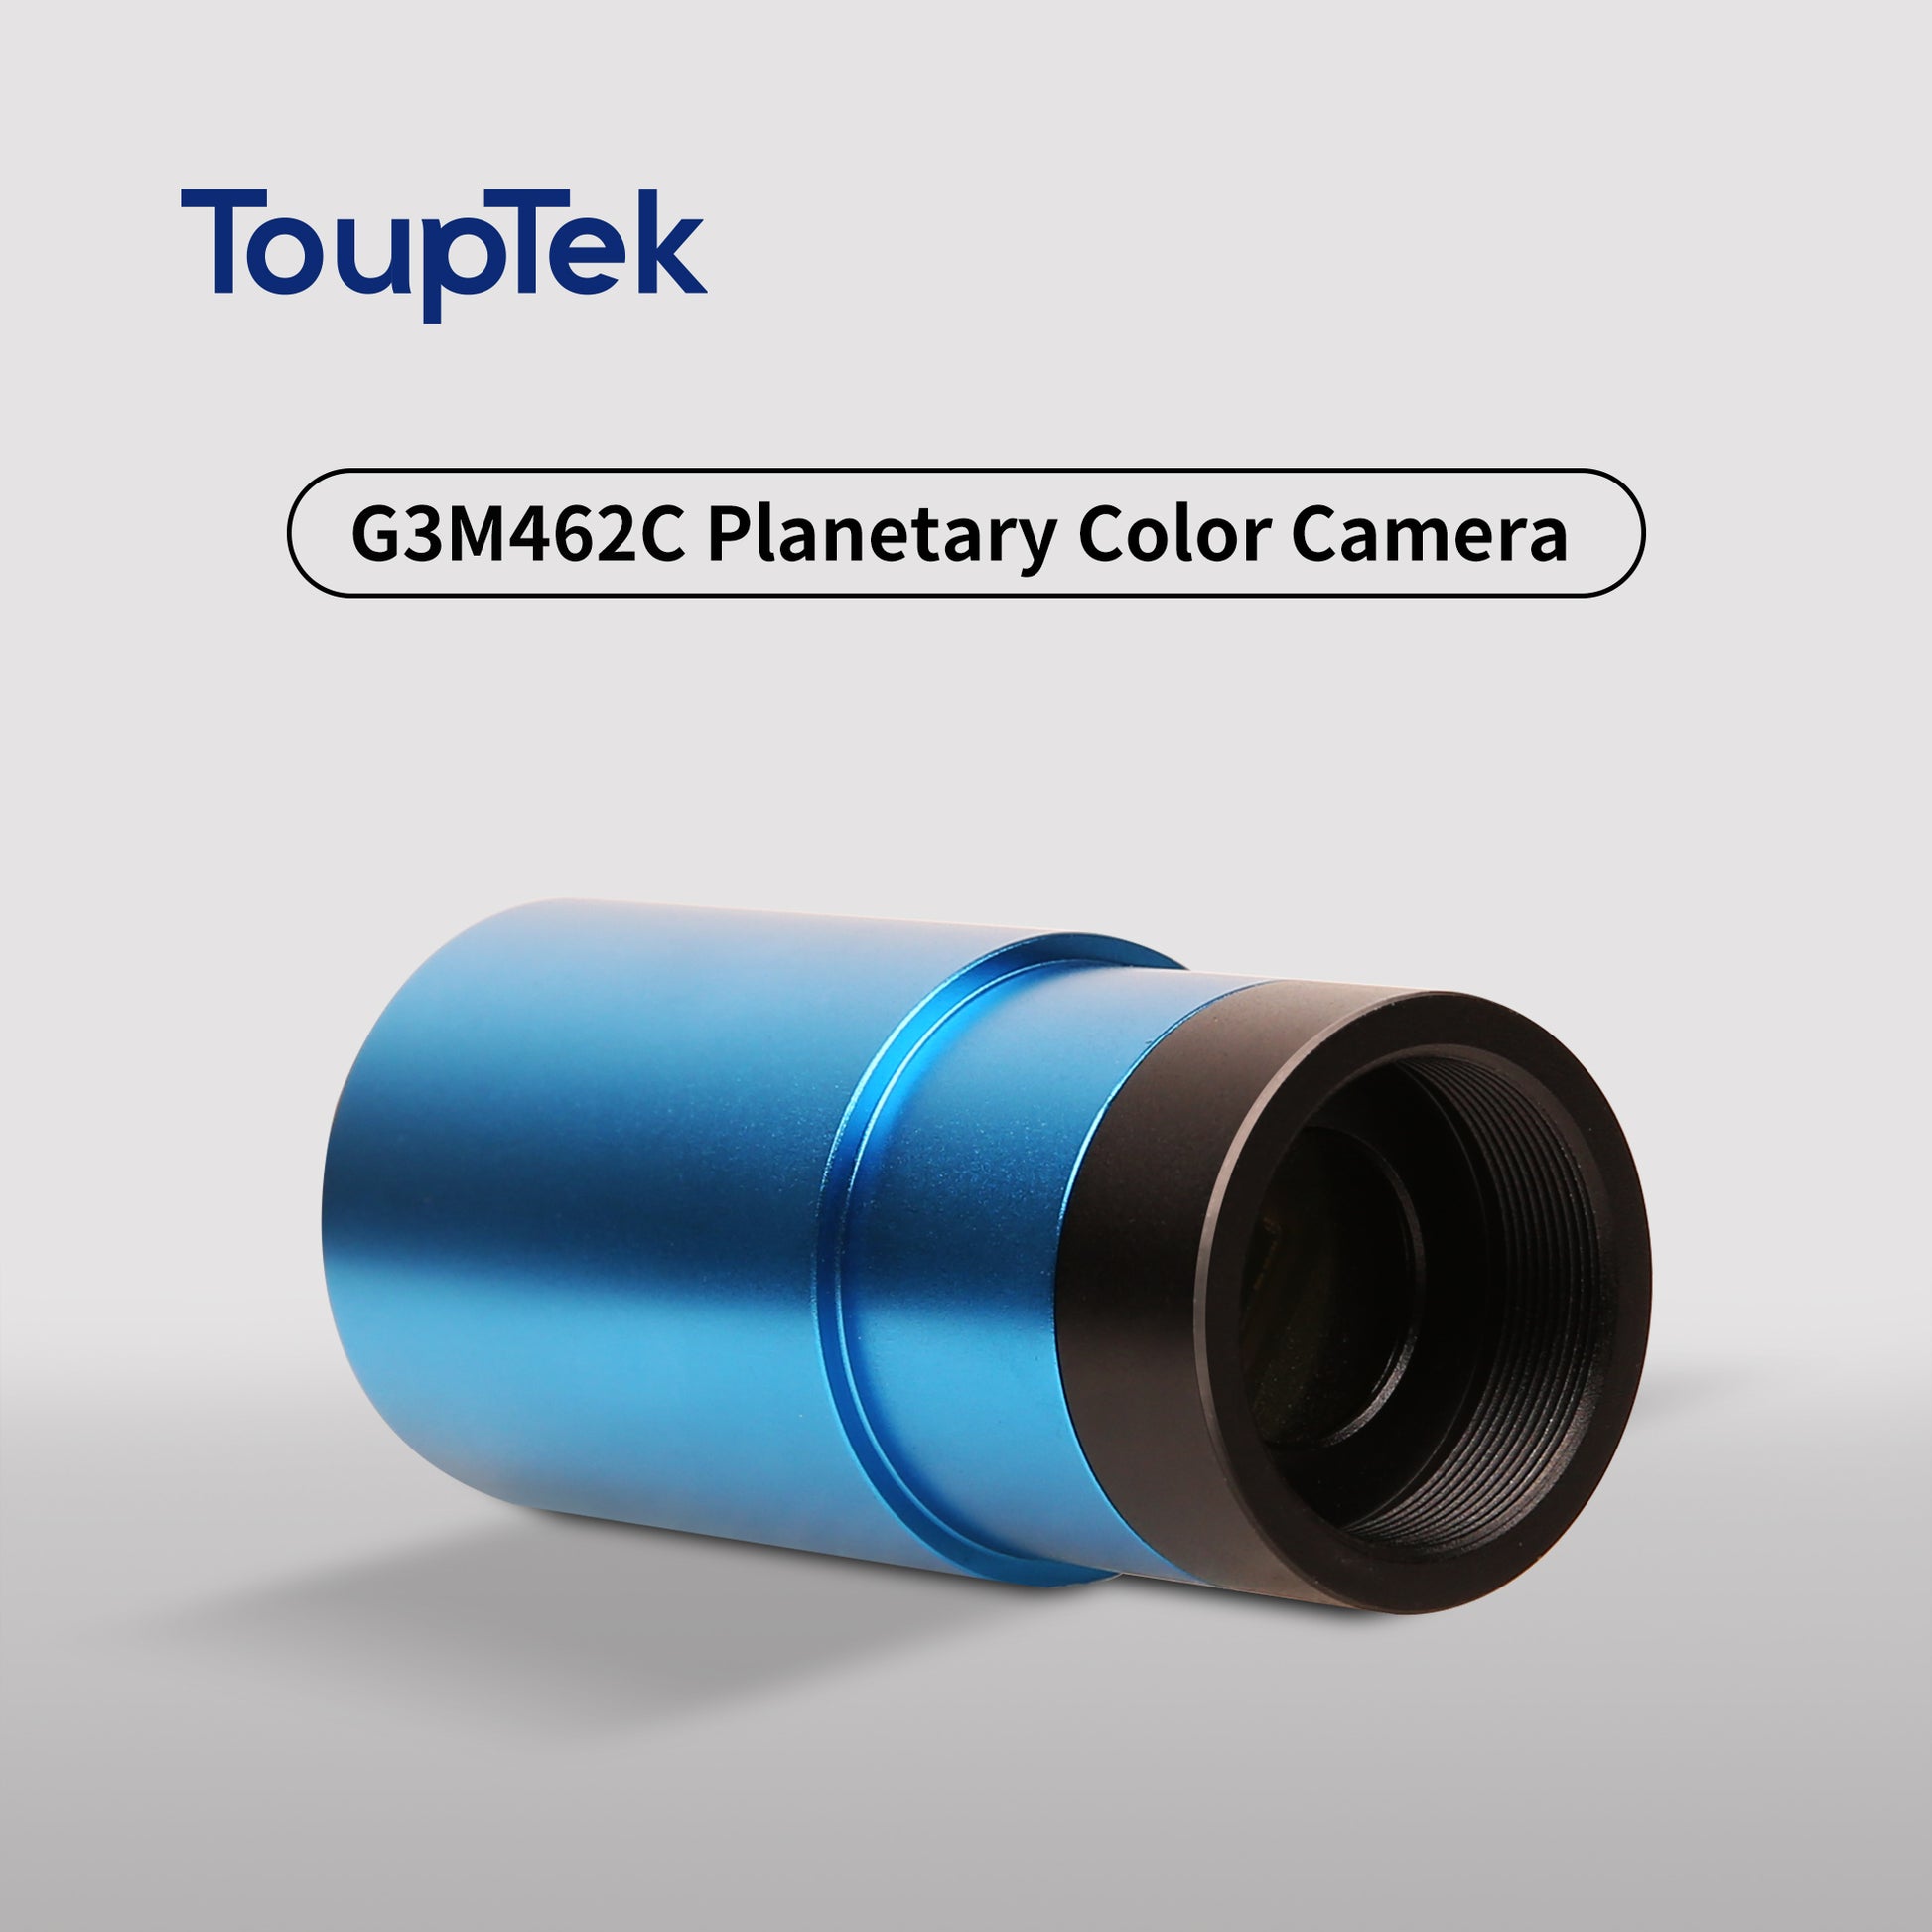 G3M462C Planetary Color Camera